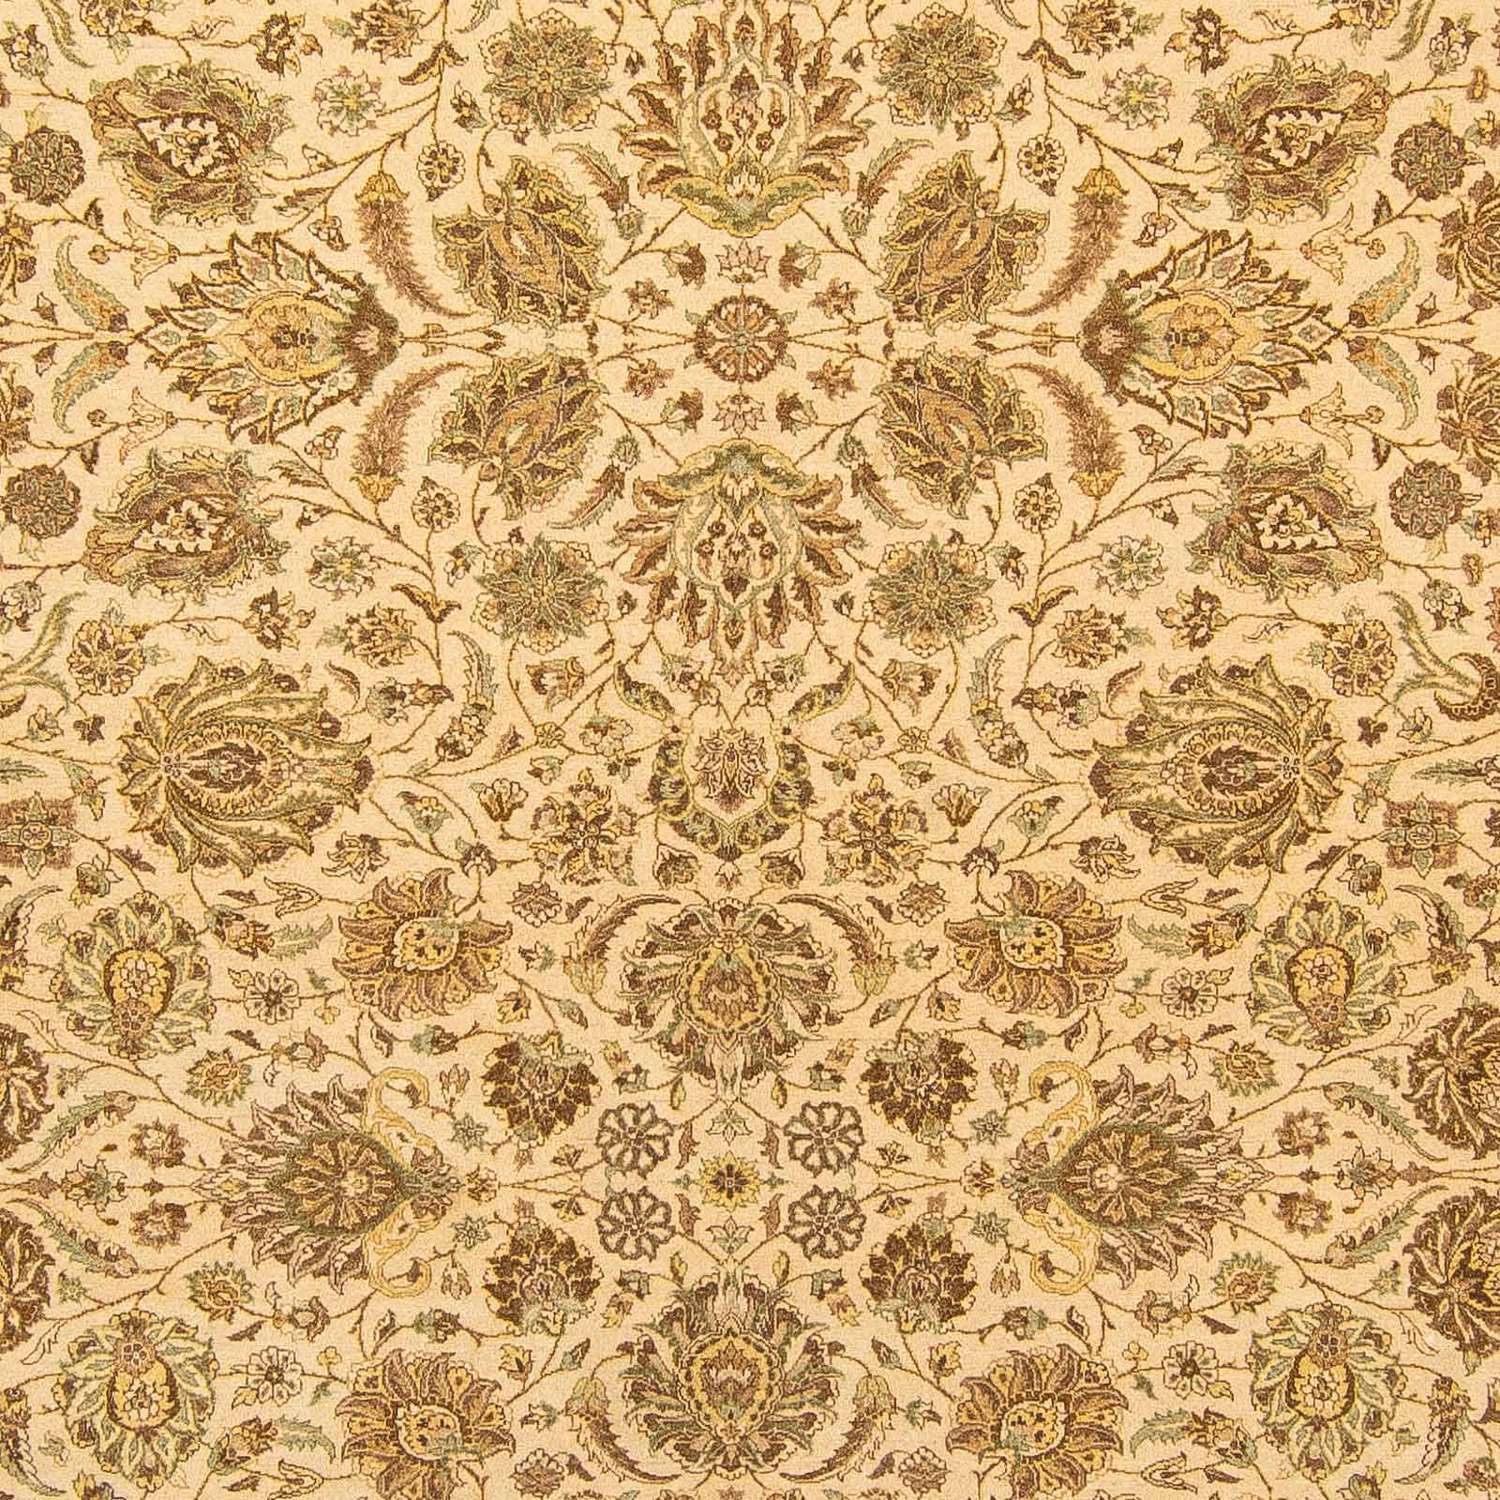 Zieglerův koberec - 368 x 277 cm - hnědá